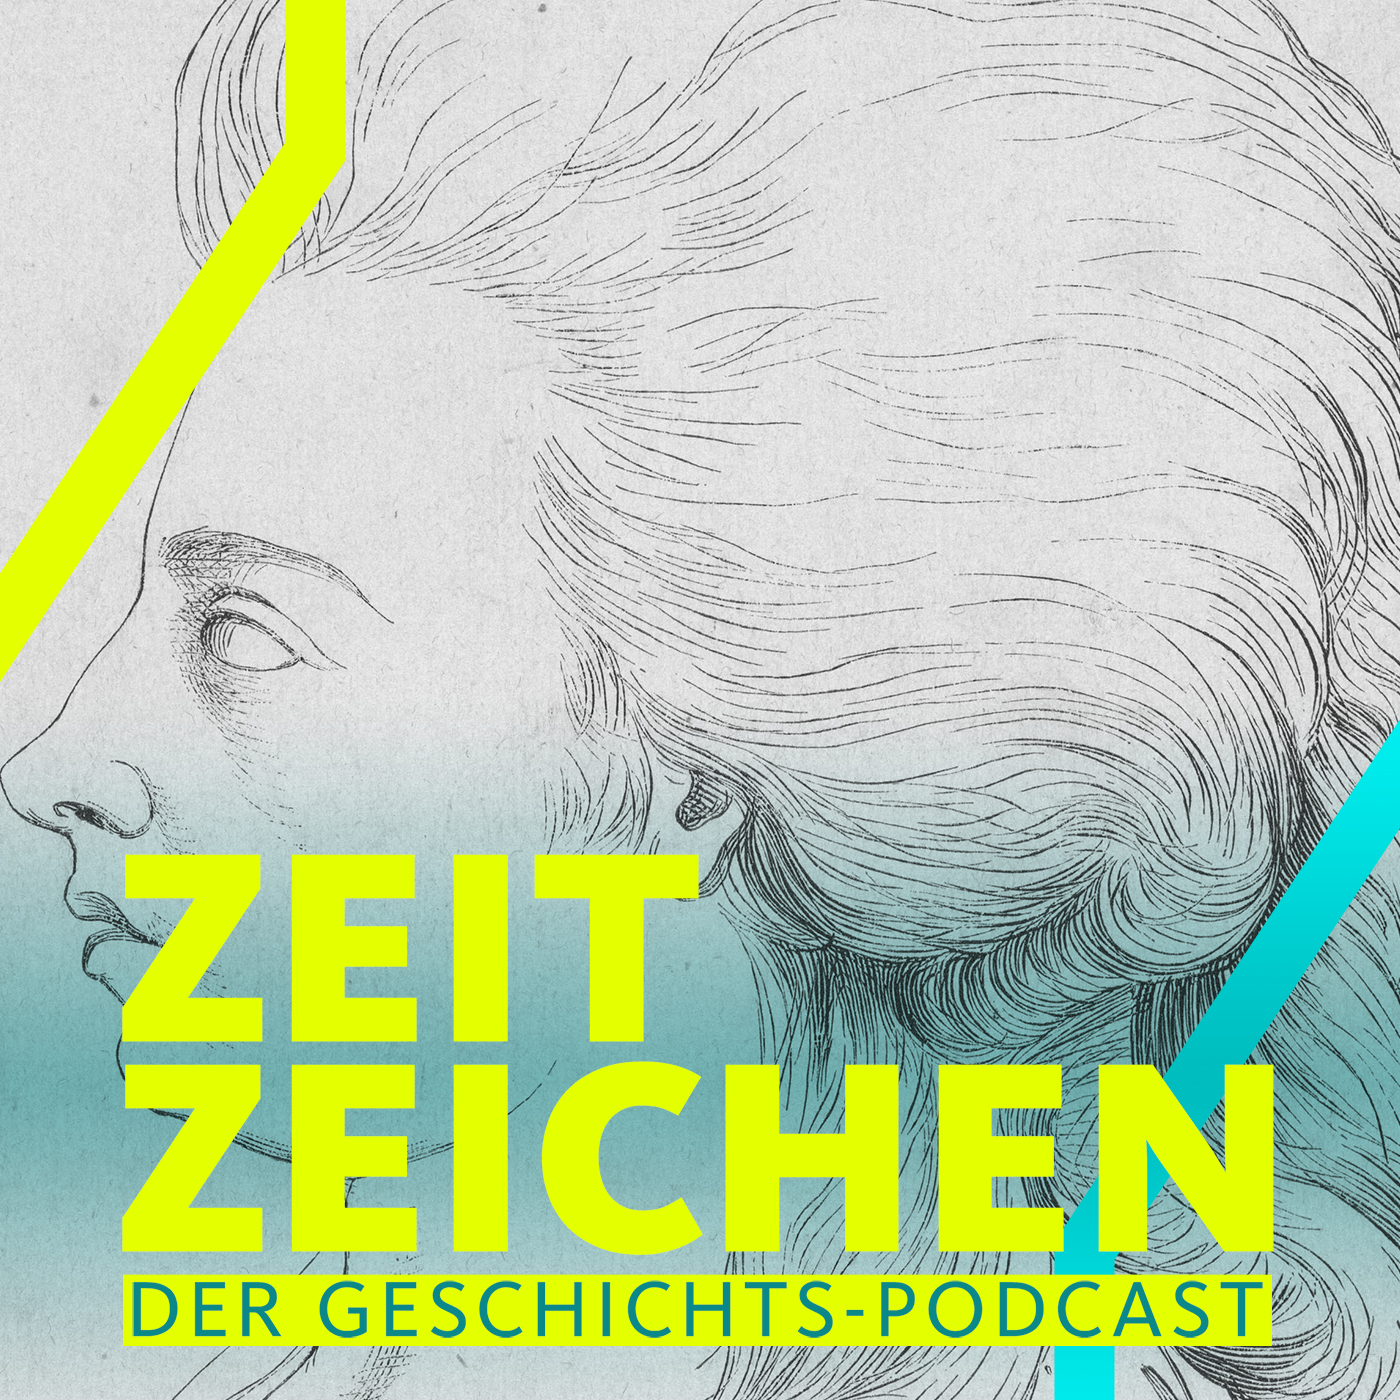 Beeindruckte Mozart: Die blinde Pianistin Maria Theresia Paradis